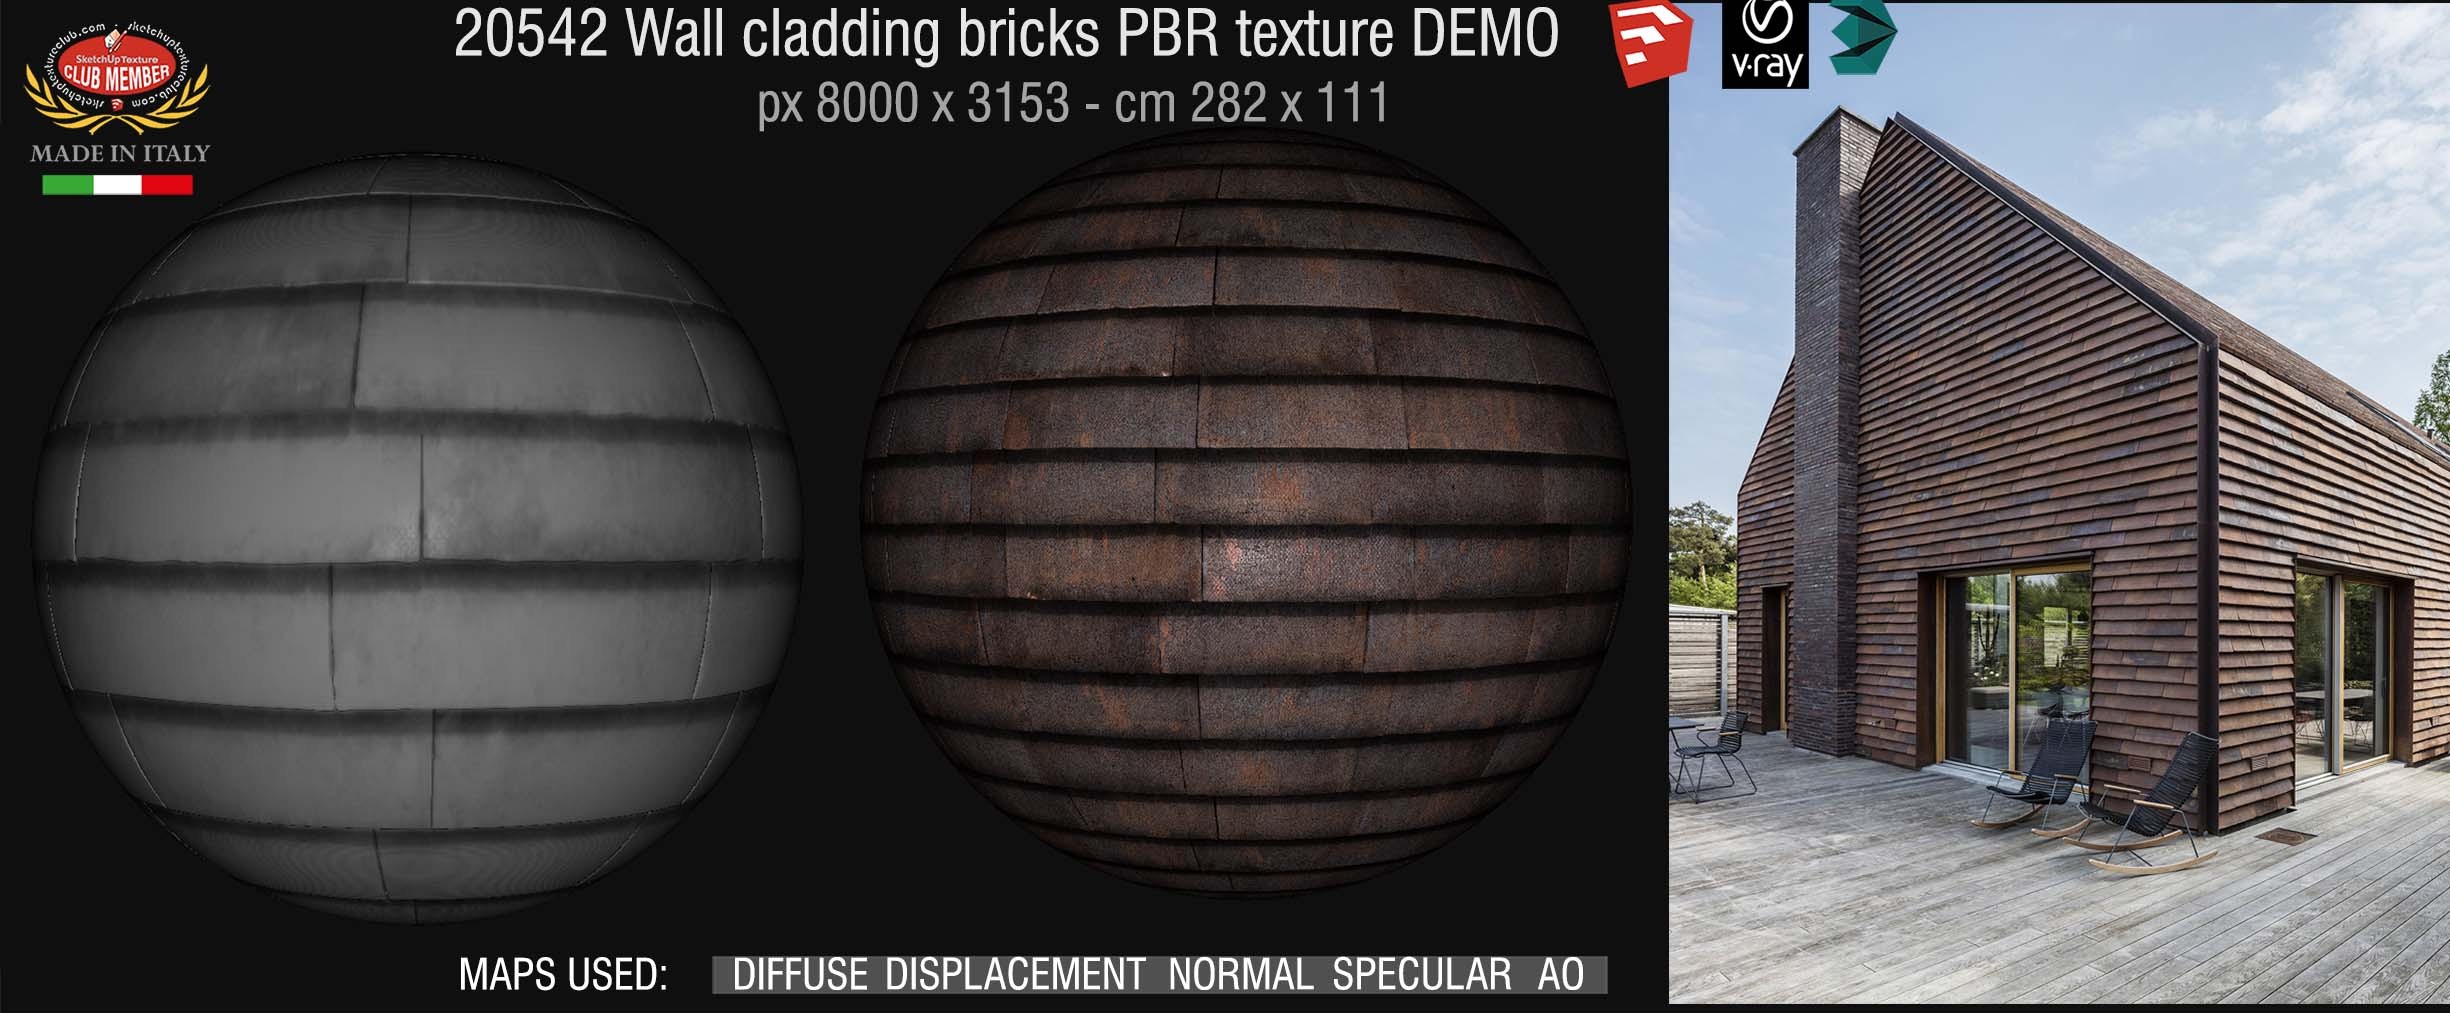 21452 Wall cladding bricks PBR texture seamless DEMO